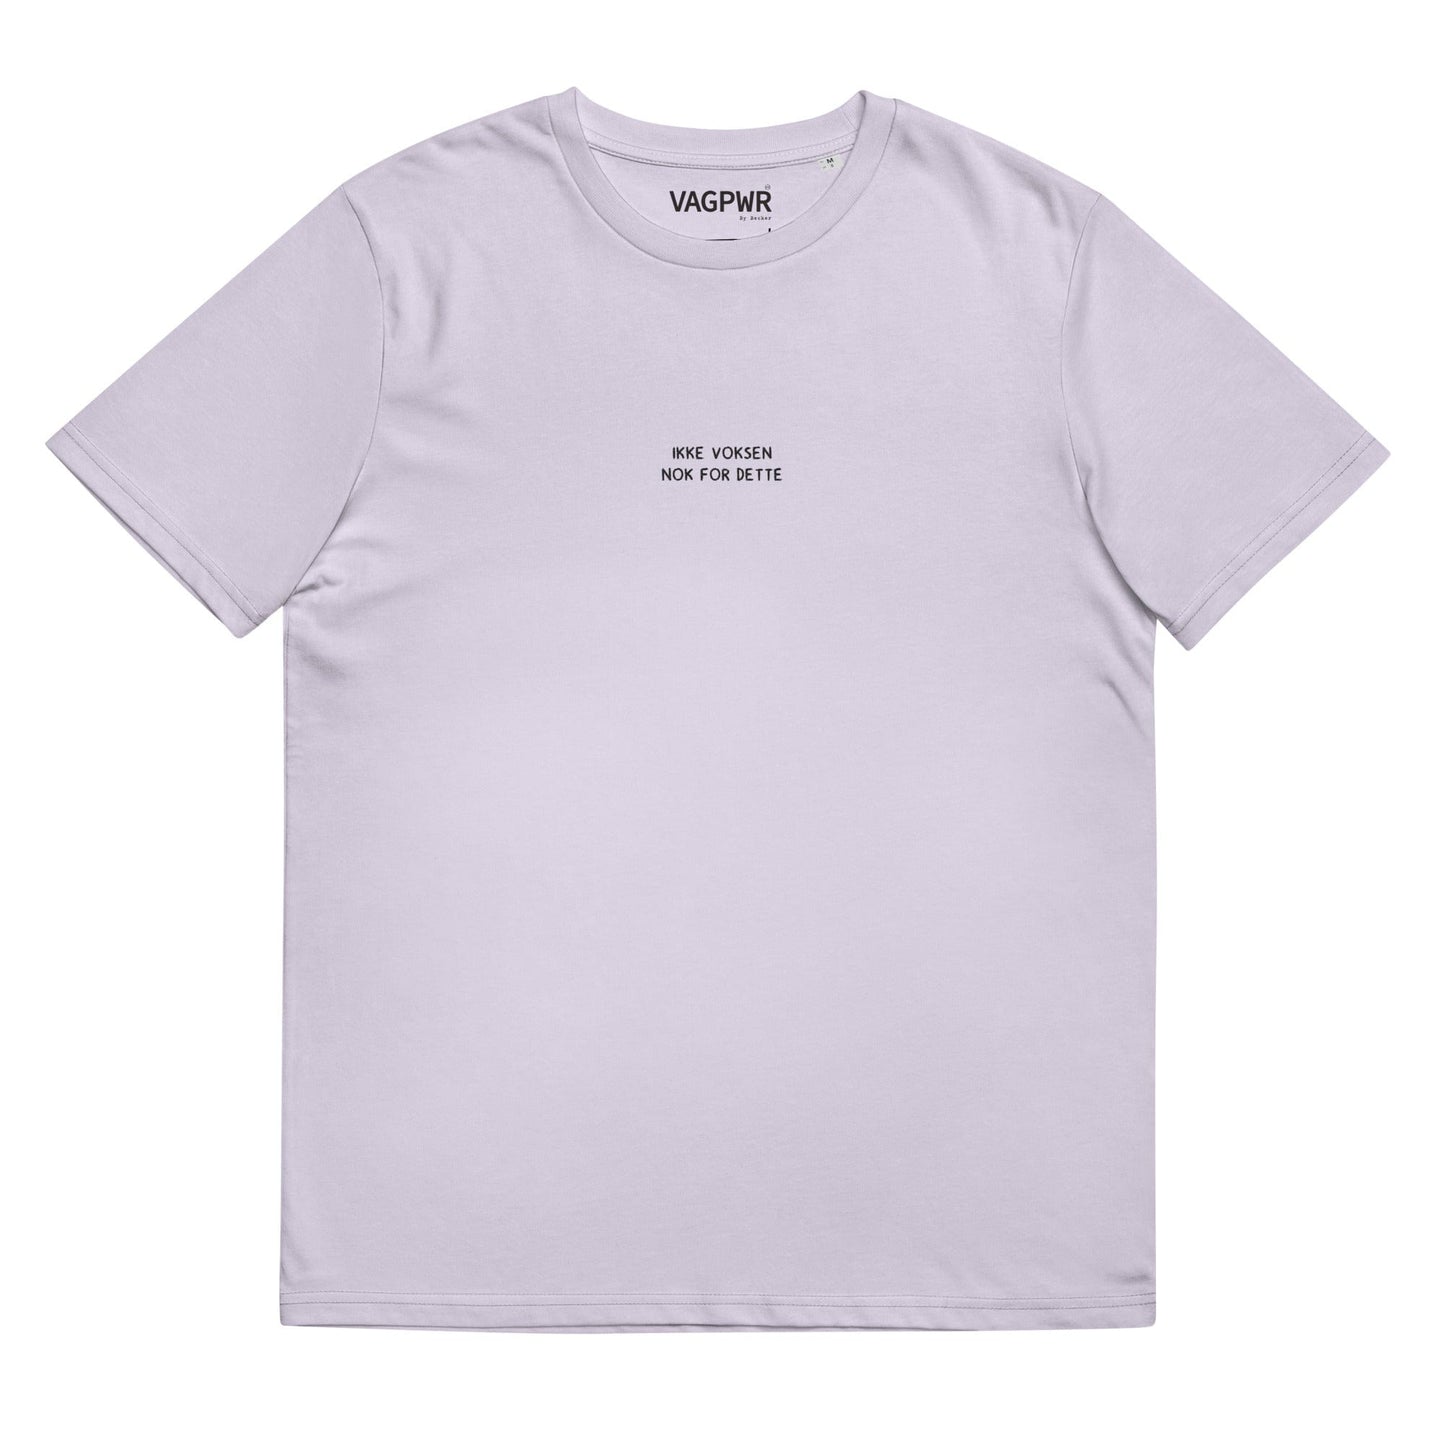 VAGPWR Lavender / S Ikke voksen black text - Unisex organic cotton t-shirt